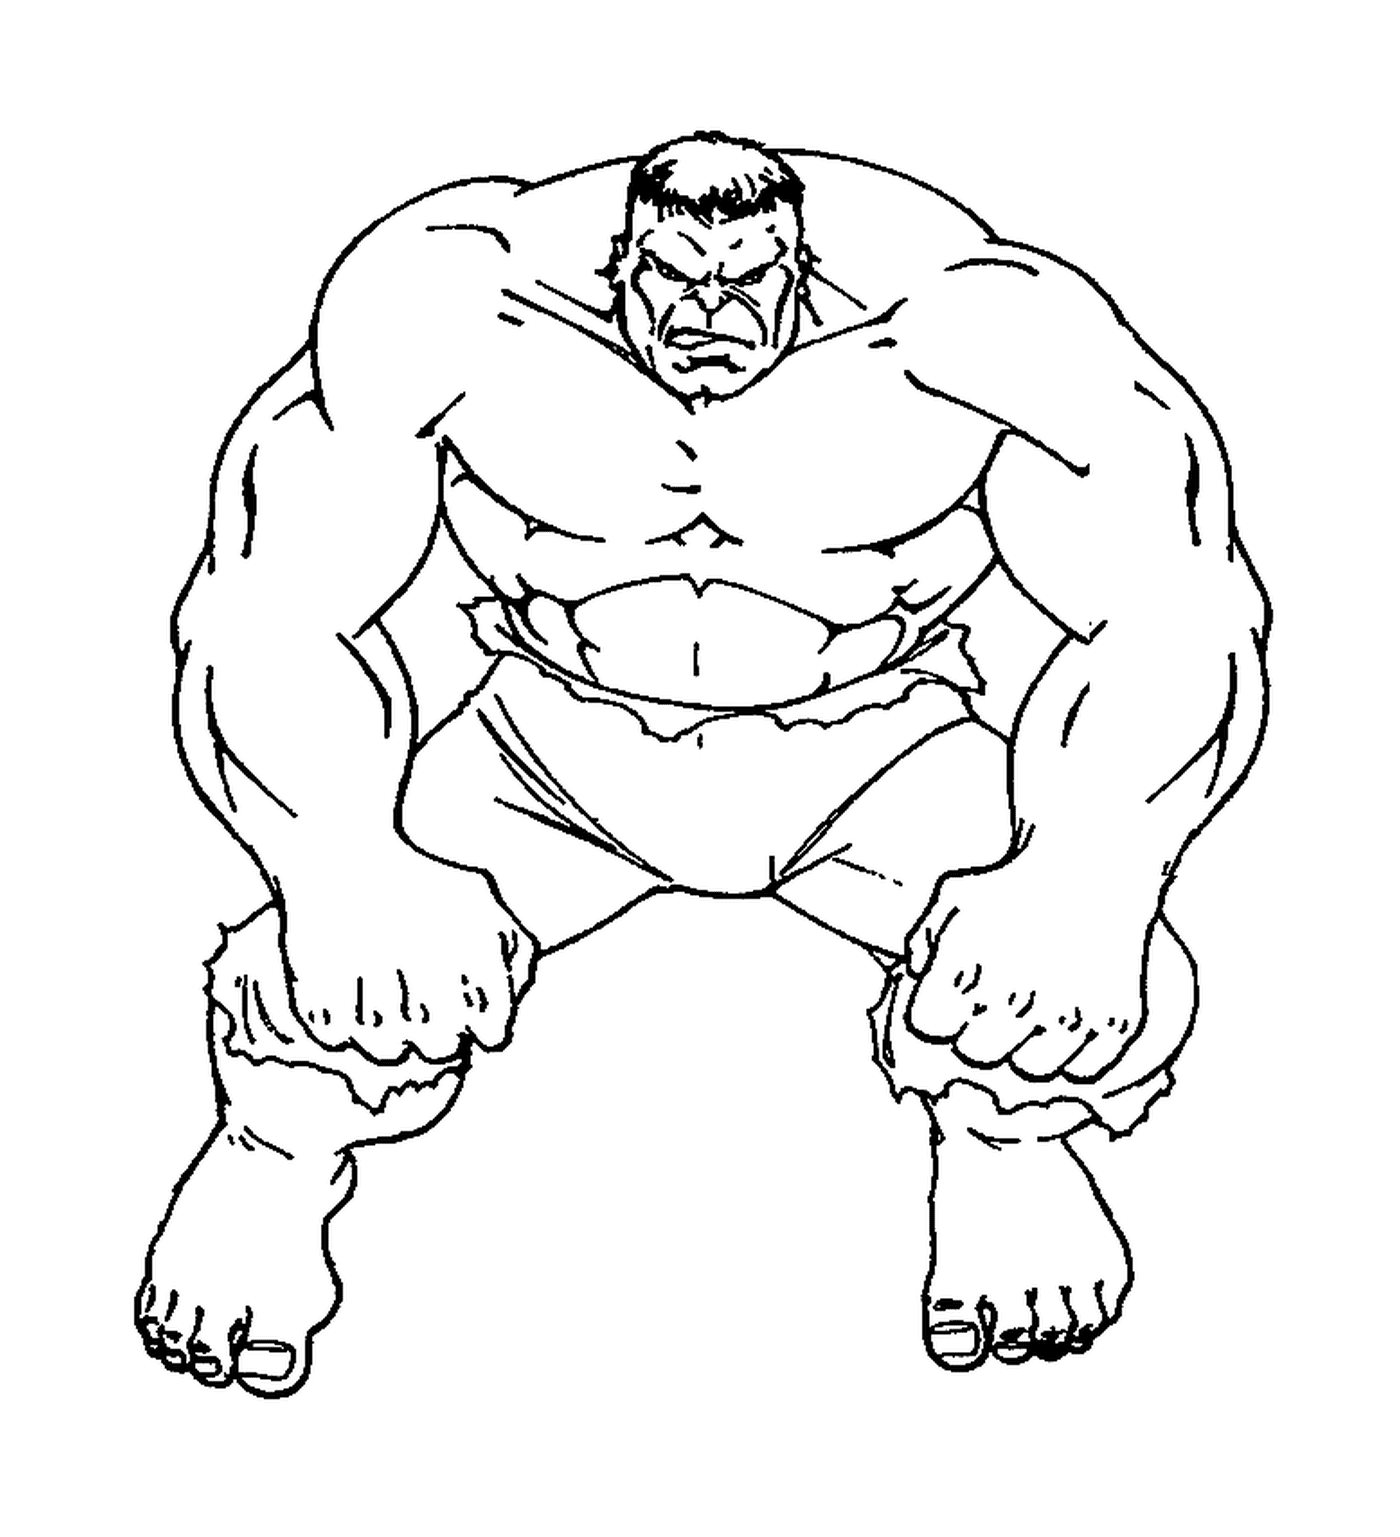  La musculatura de Hulk en un dibujo 